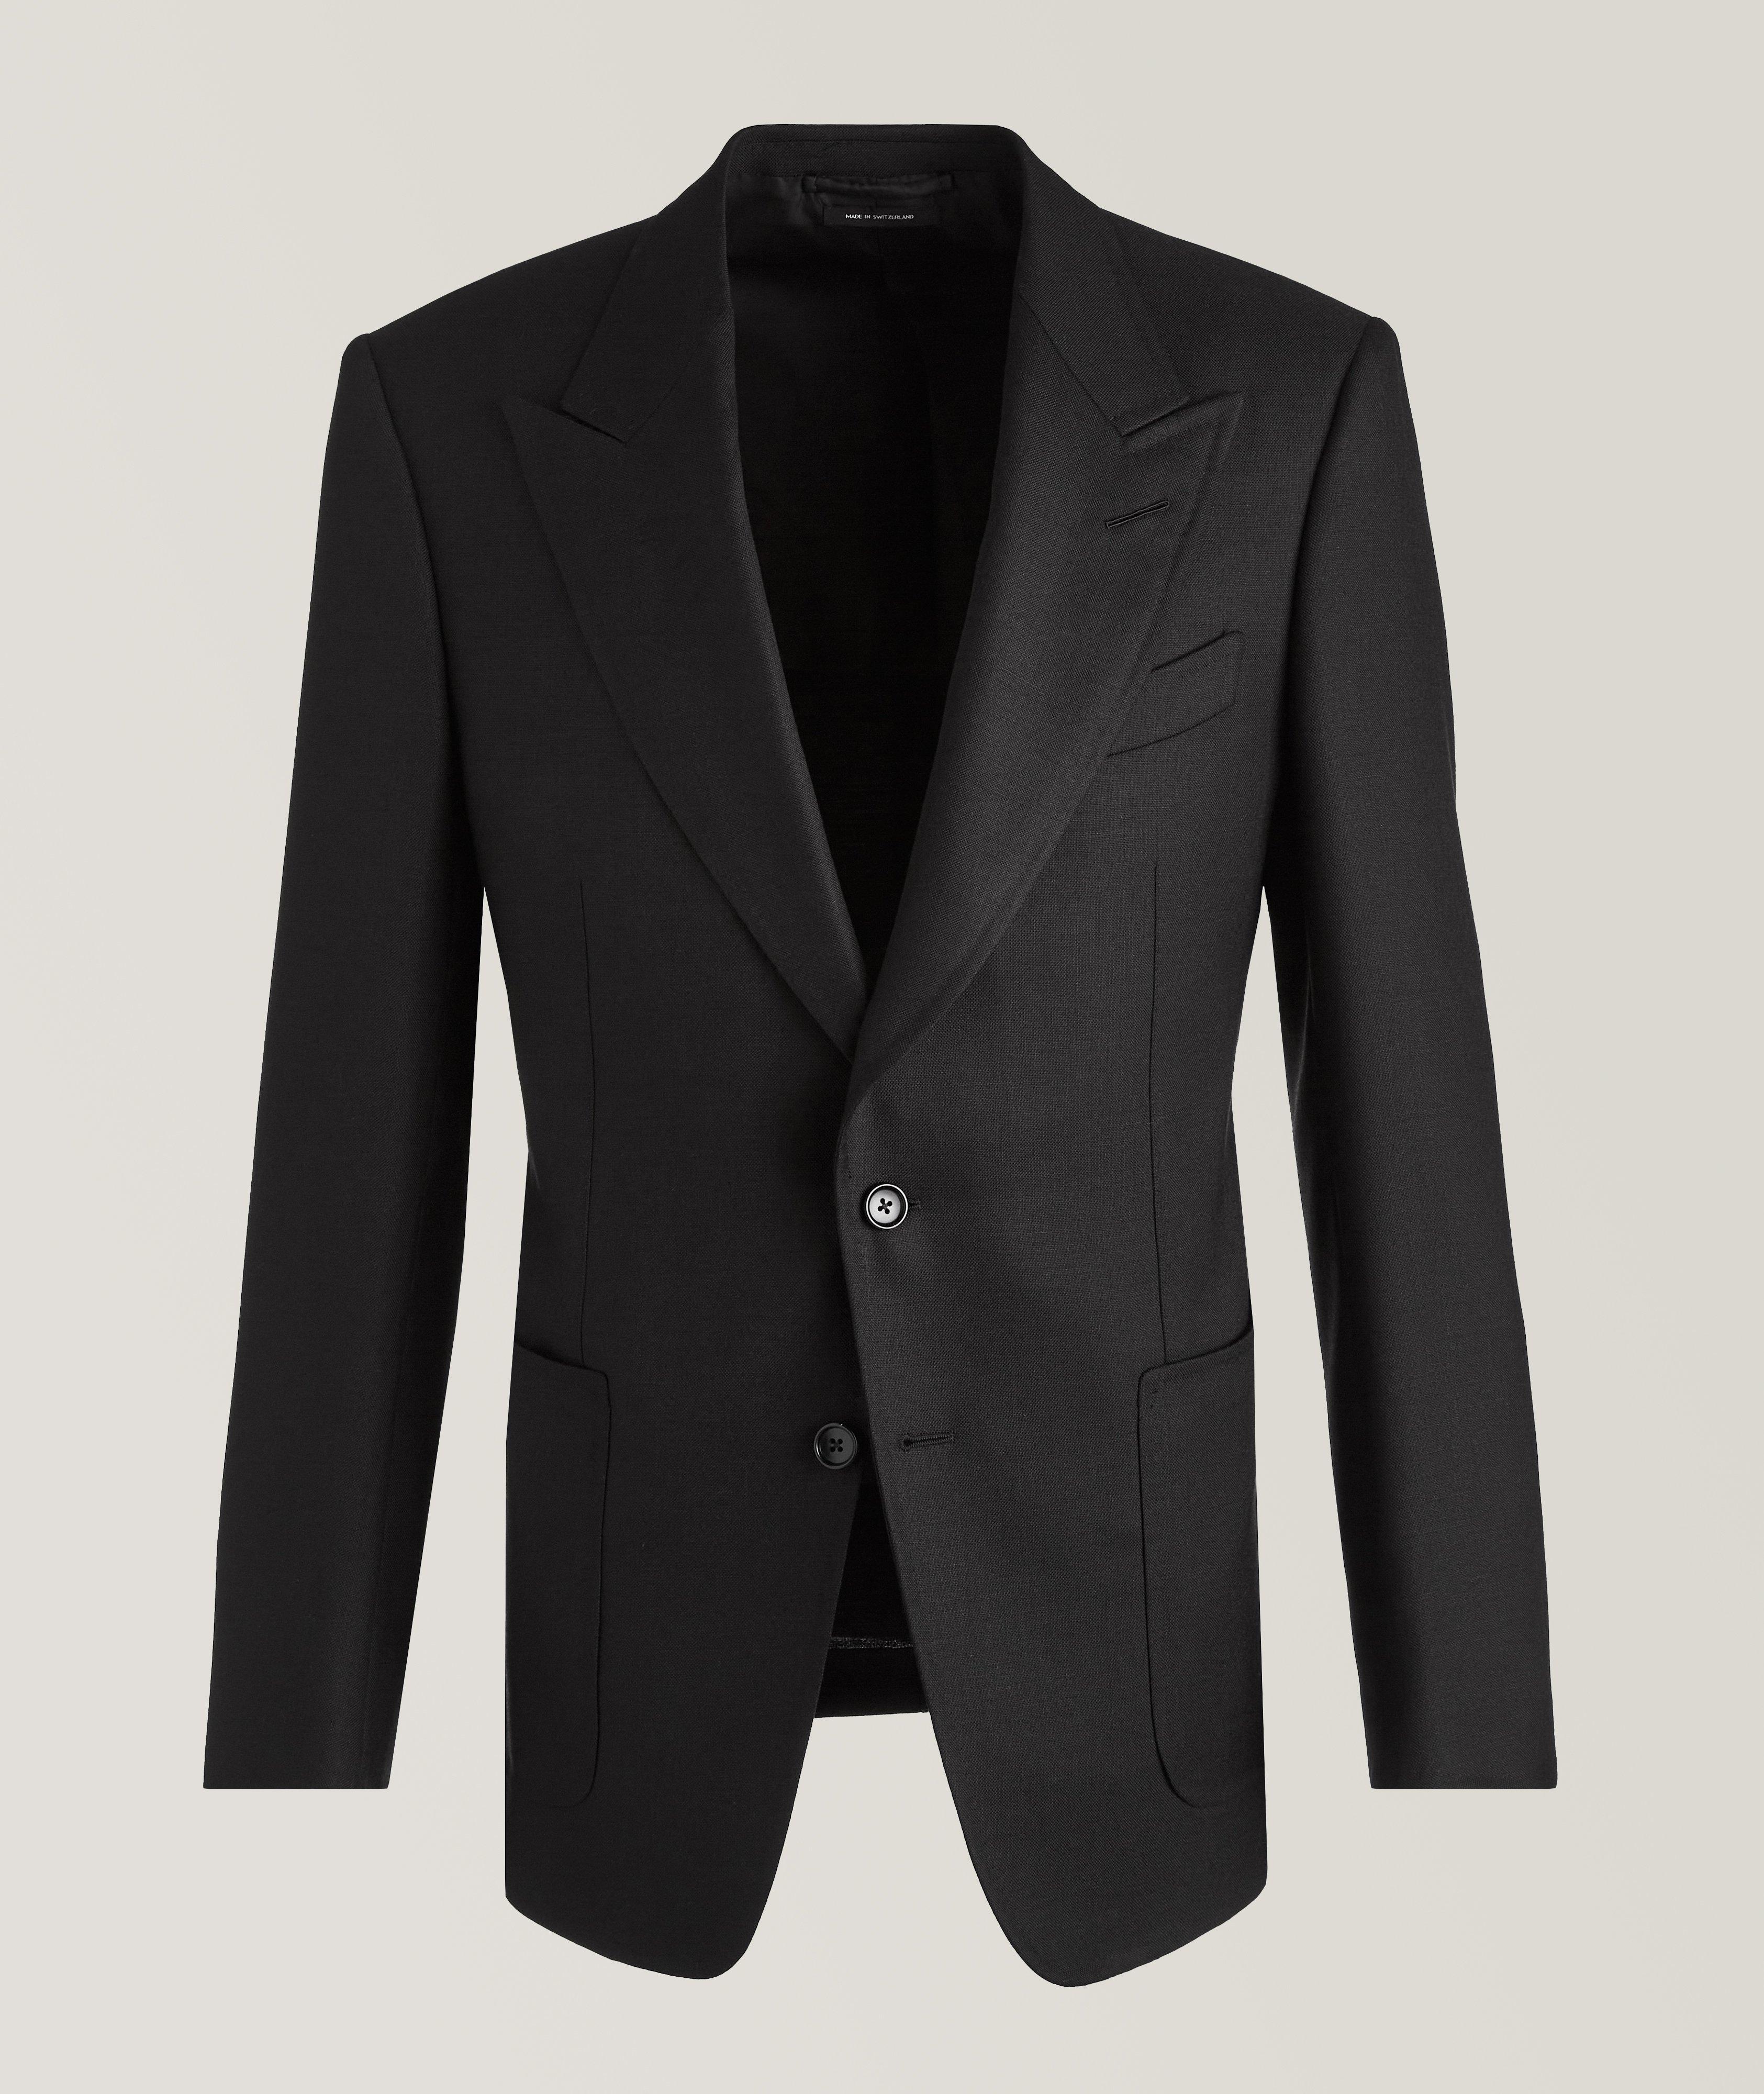 Shelton Birdseye Mohair-Blend Suit image 0